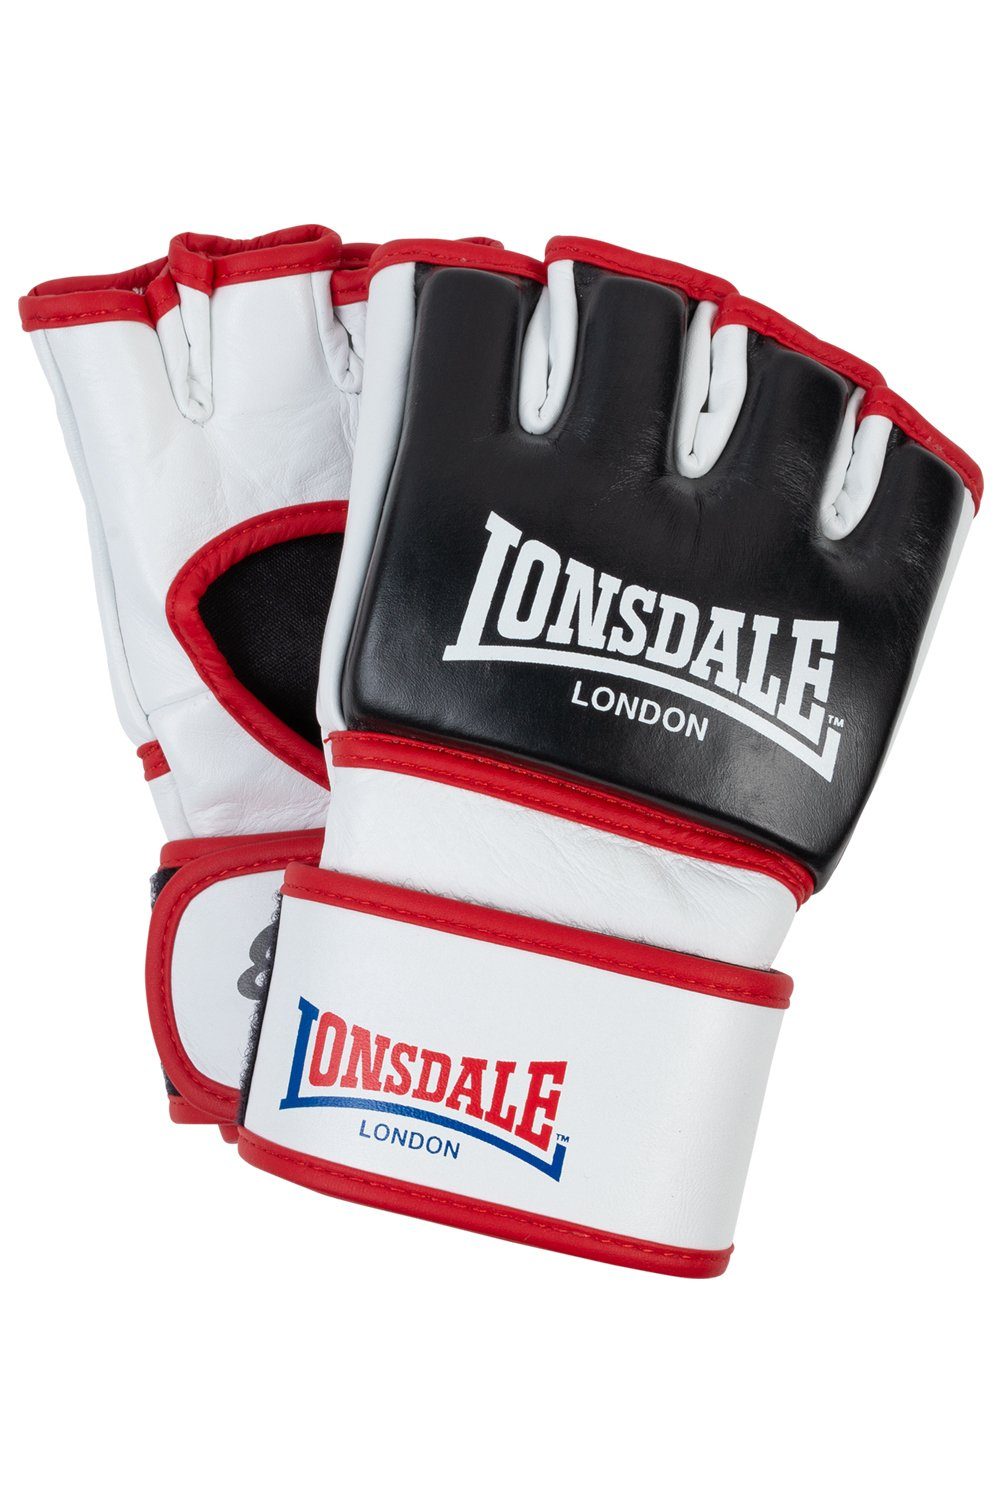 MMA-Handschuhe EMORY Lonsdale